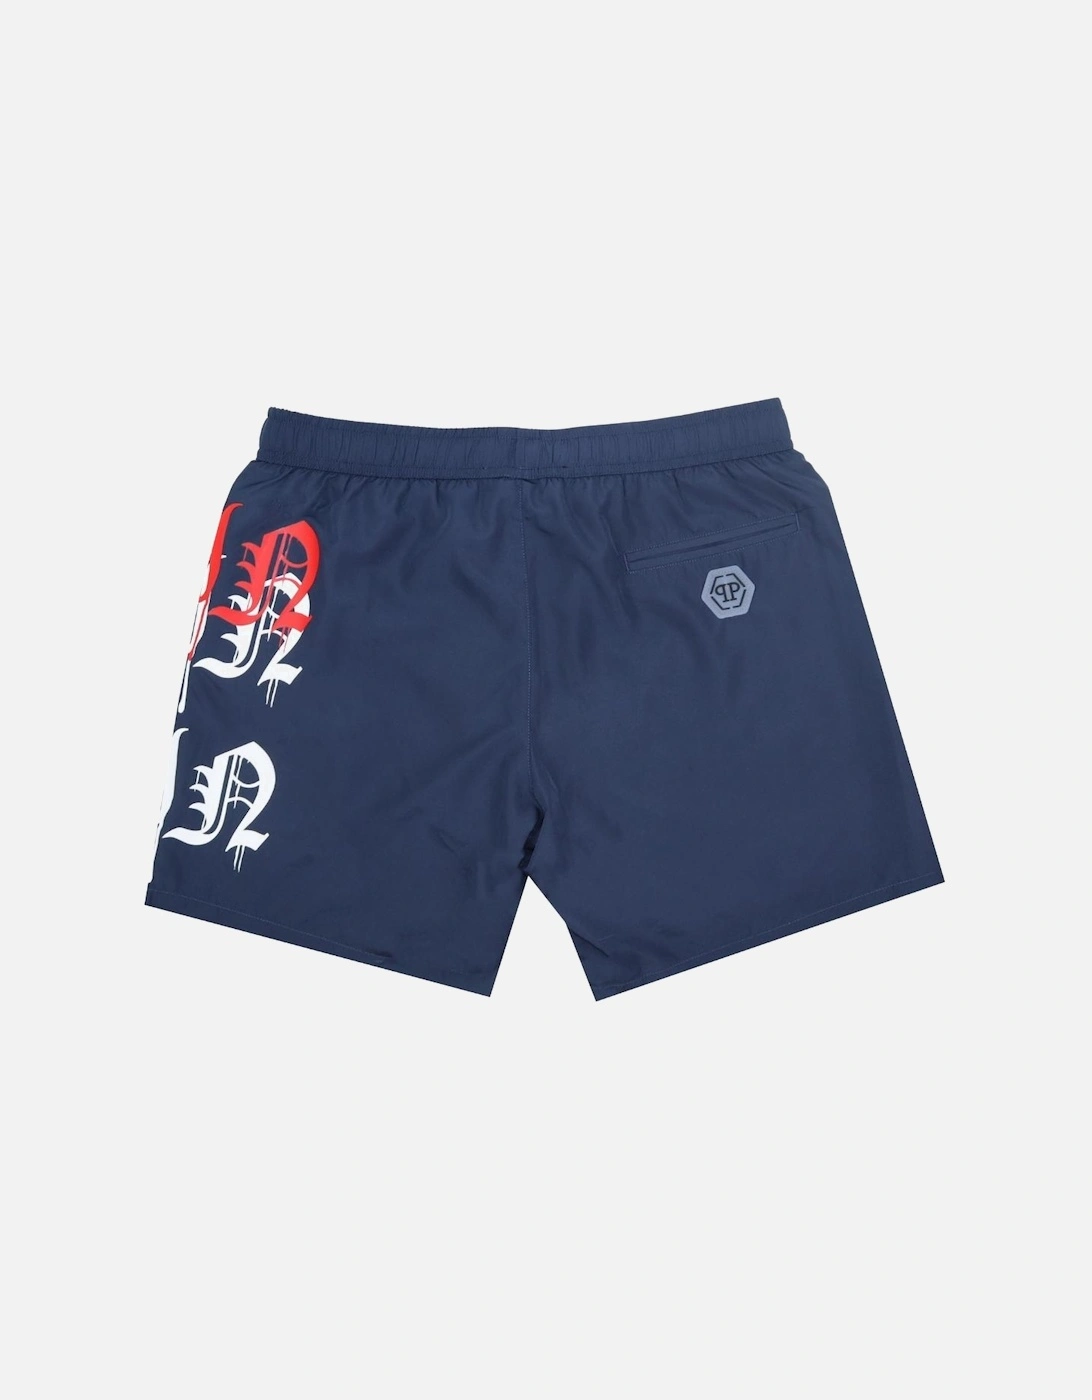 Melting Logos Navy Blue Swim Shorts